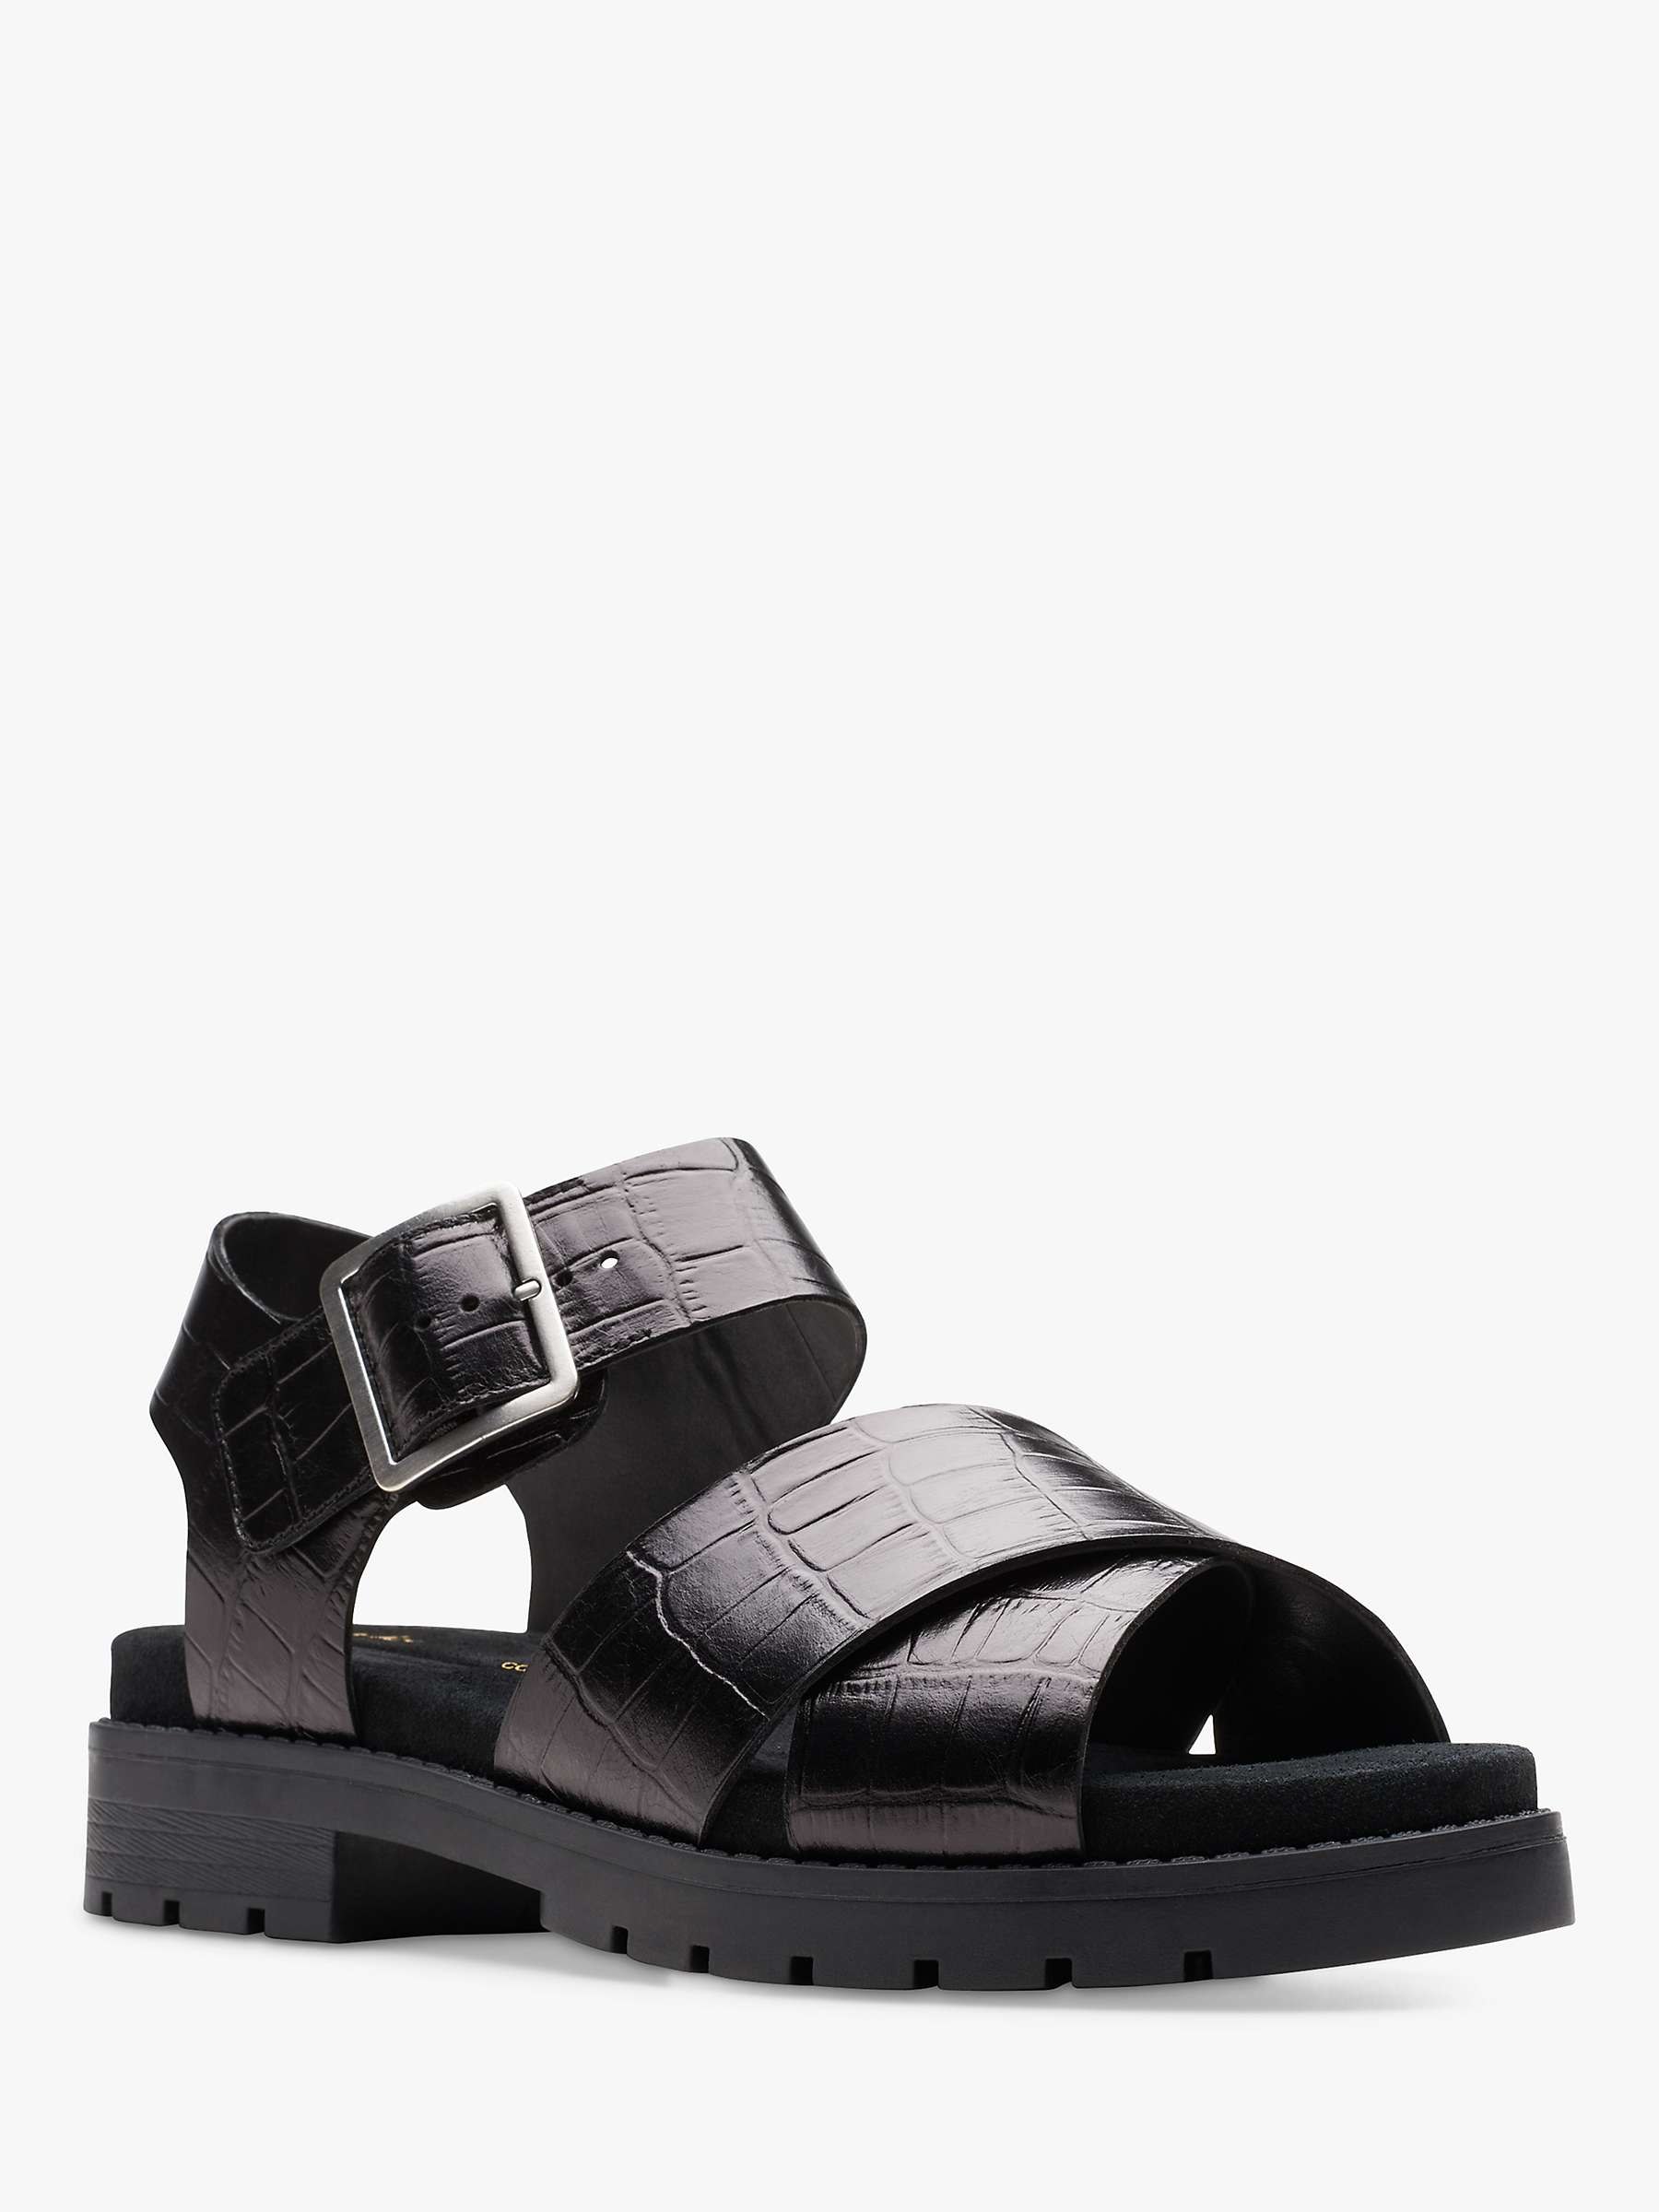 Buy Clarks Orinocco Textured Leather Cross Strap Sandals, Black Online at johnlewis.com